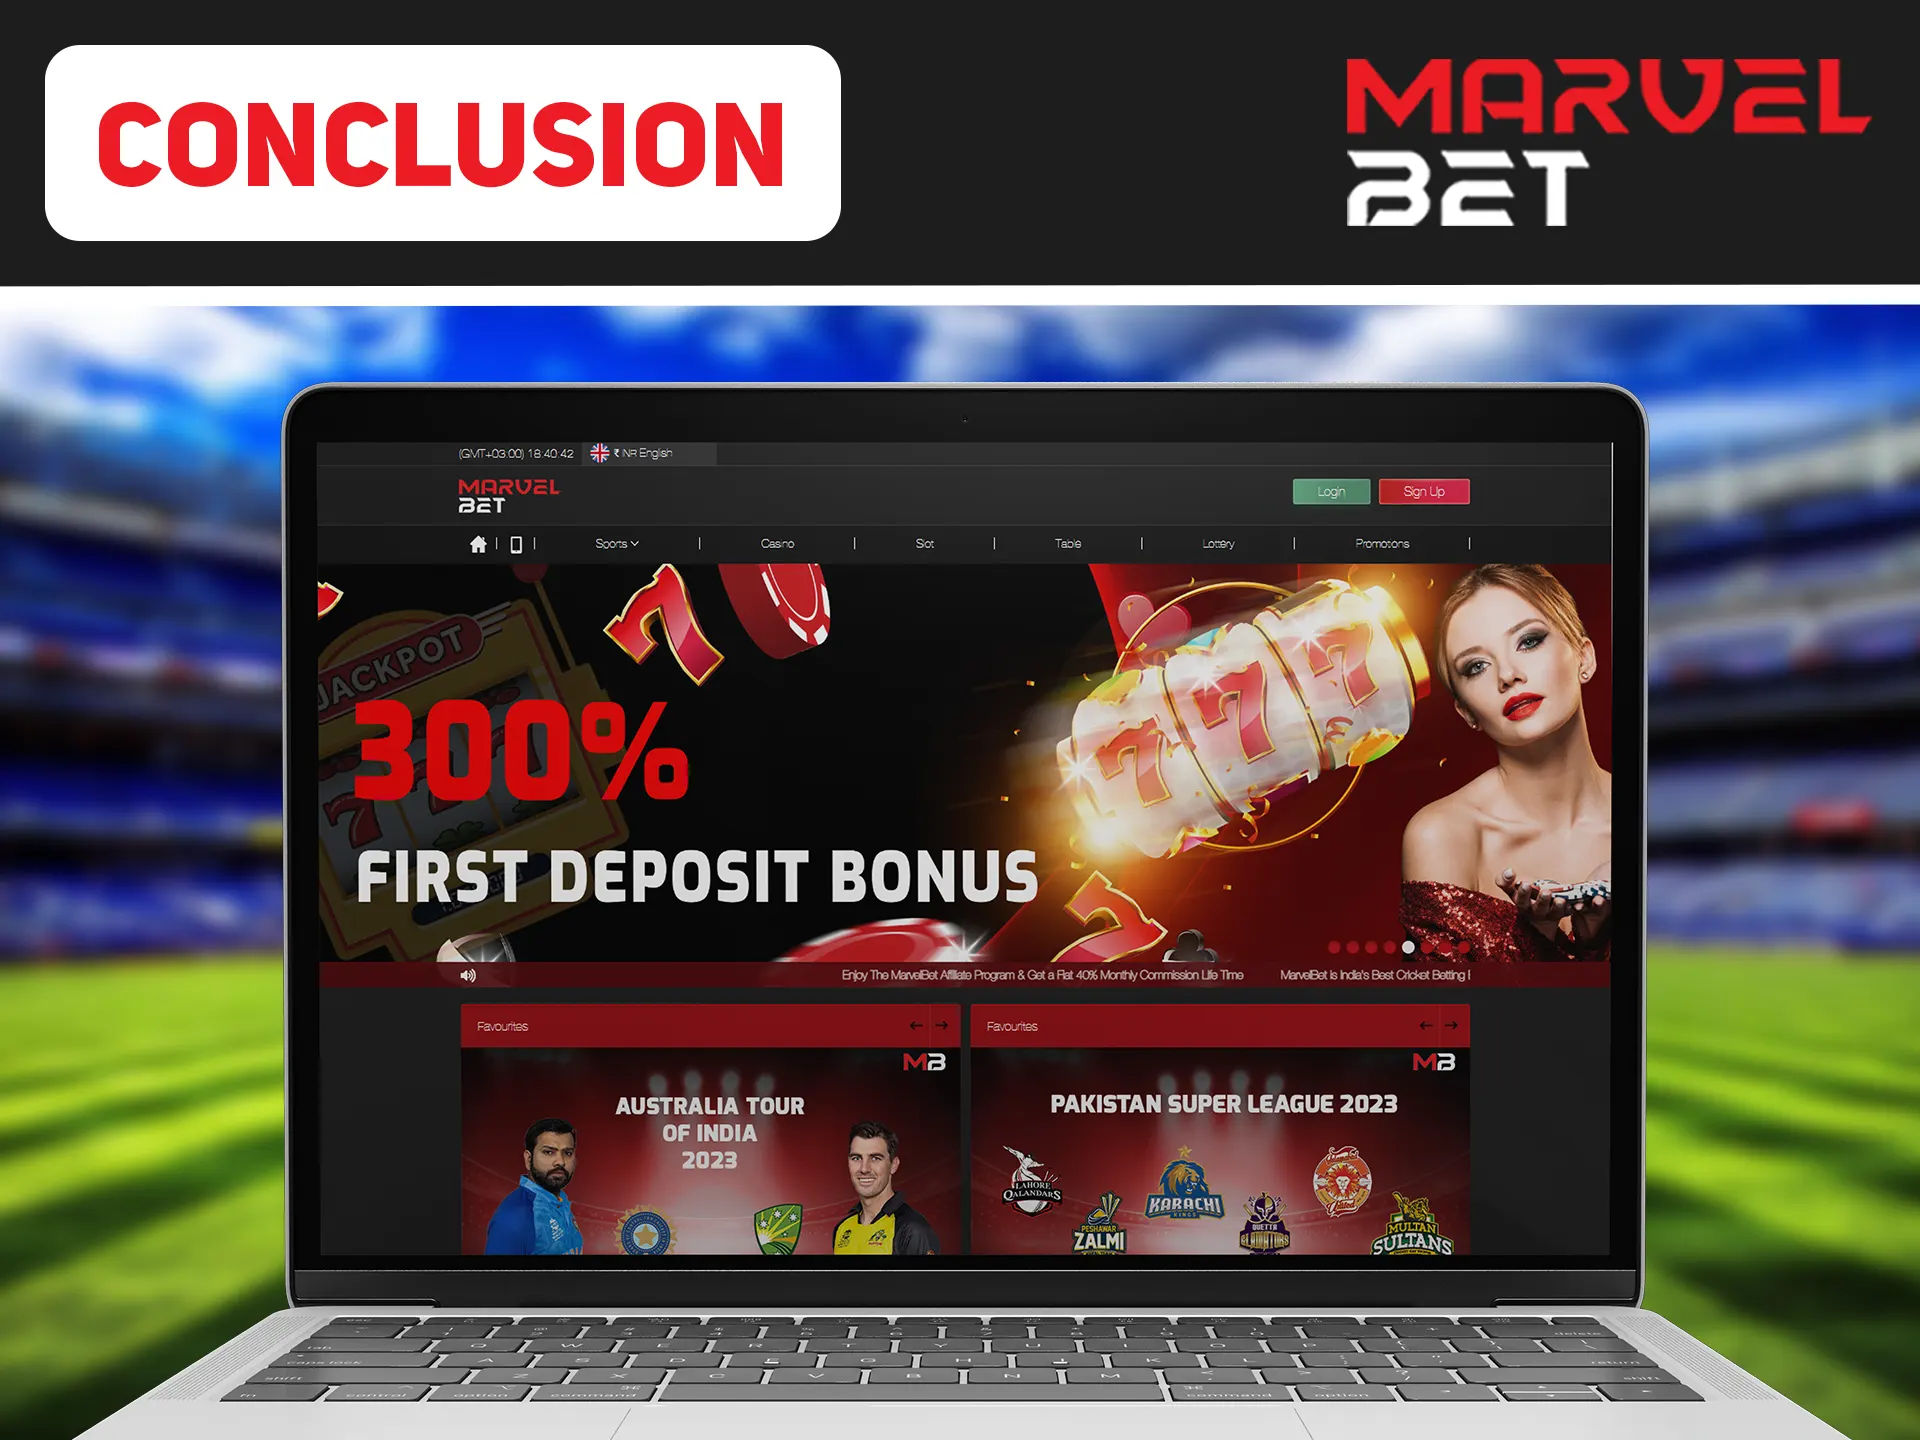 Marvelbet bet provides all kinds of gambling enjoyments.